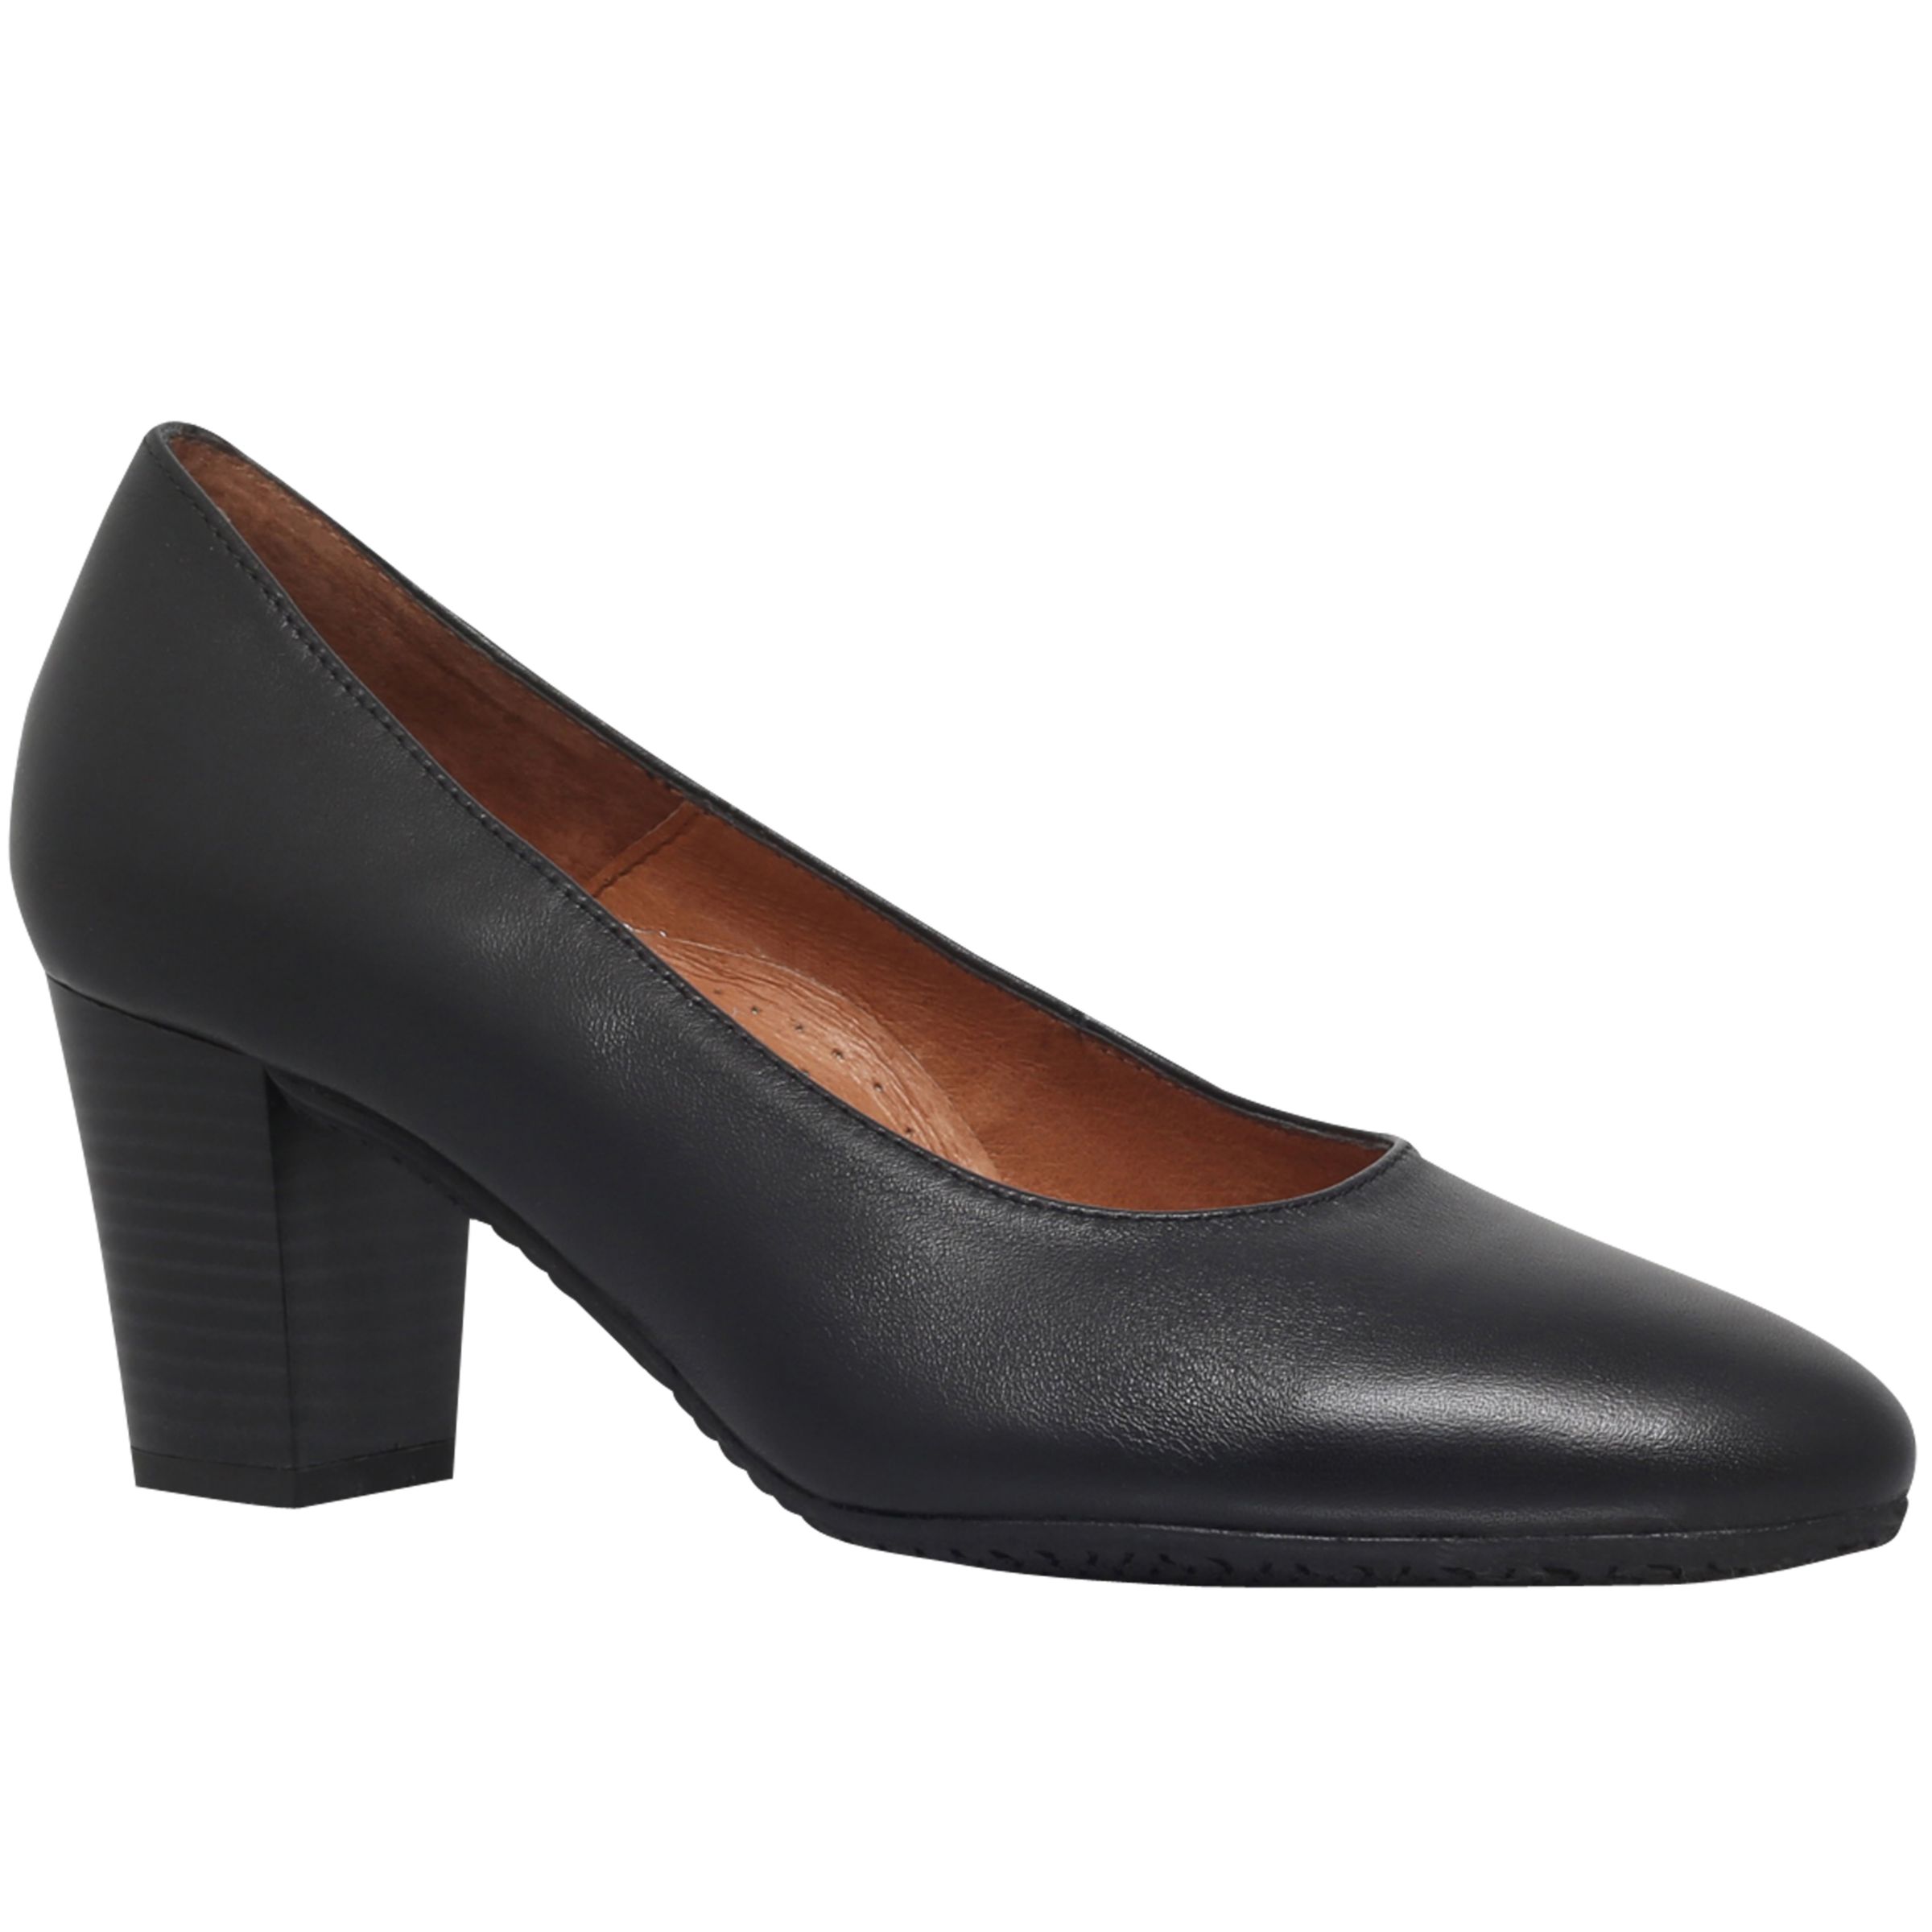 Carvela Comfort Air Block Heeled Court Shoes, Black, 4